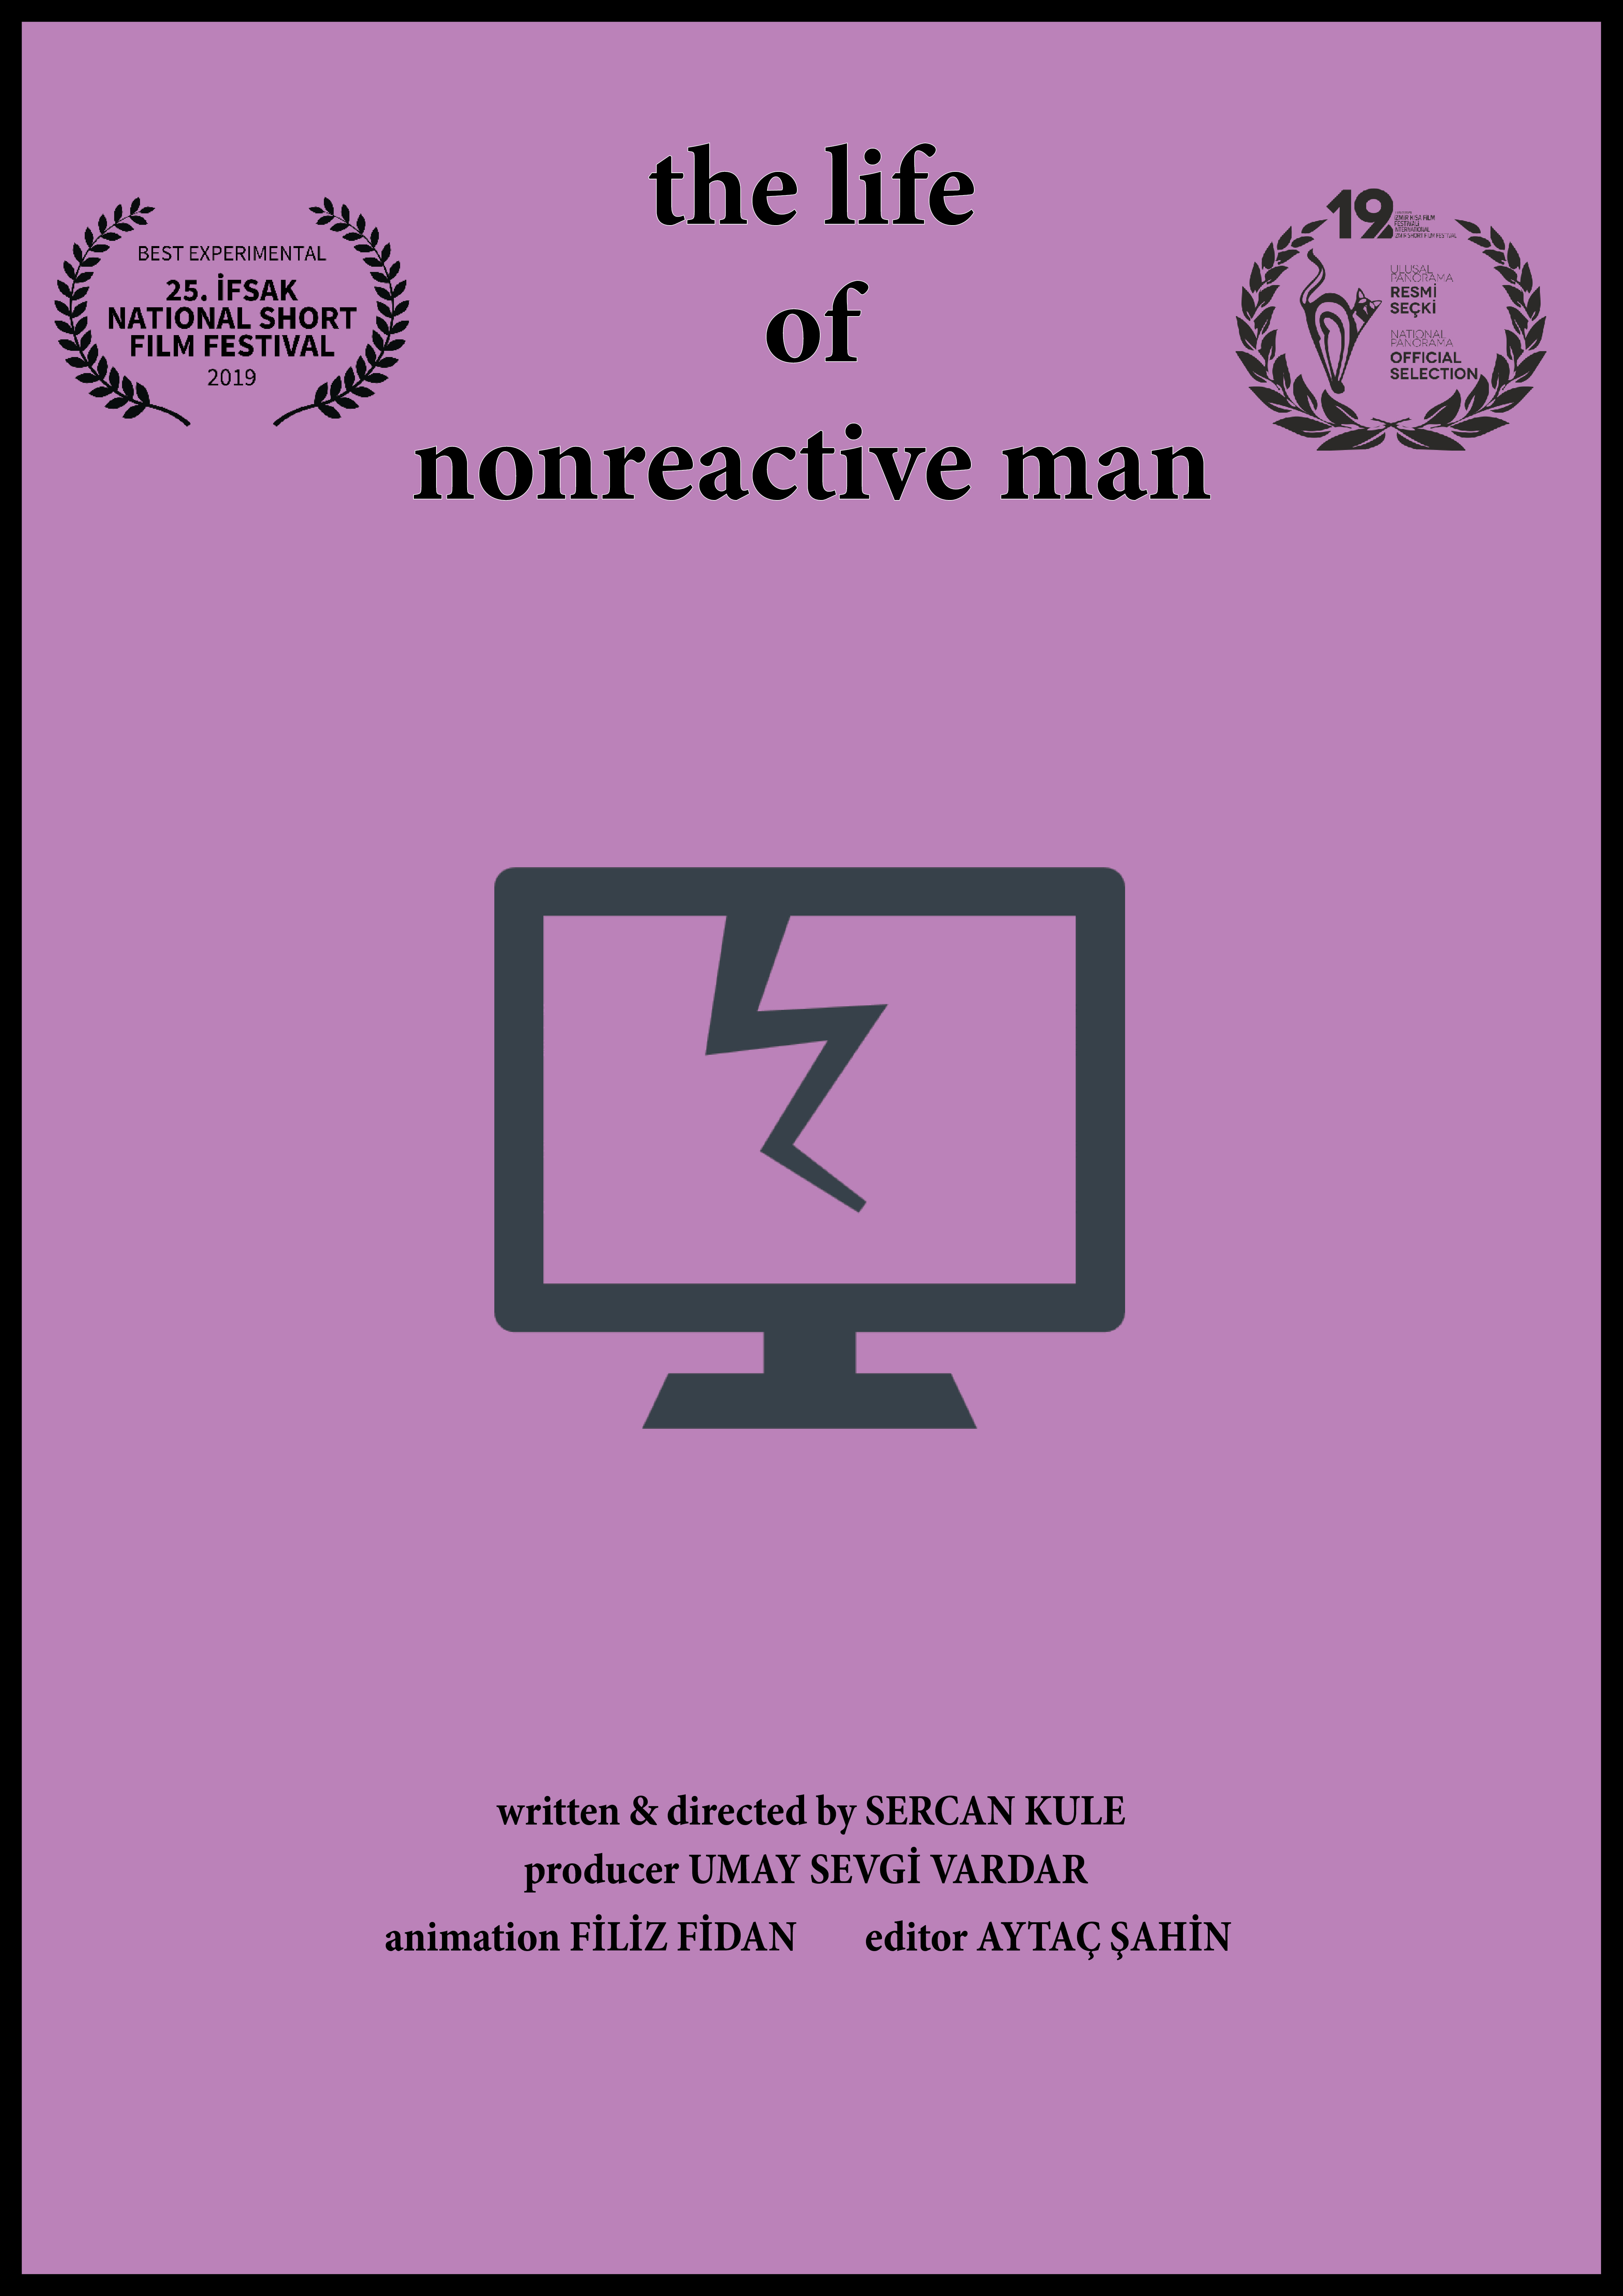 The short film 'The Life of Nonreactive Man'